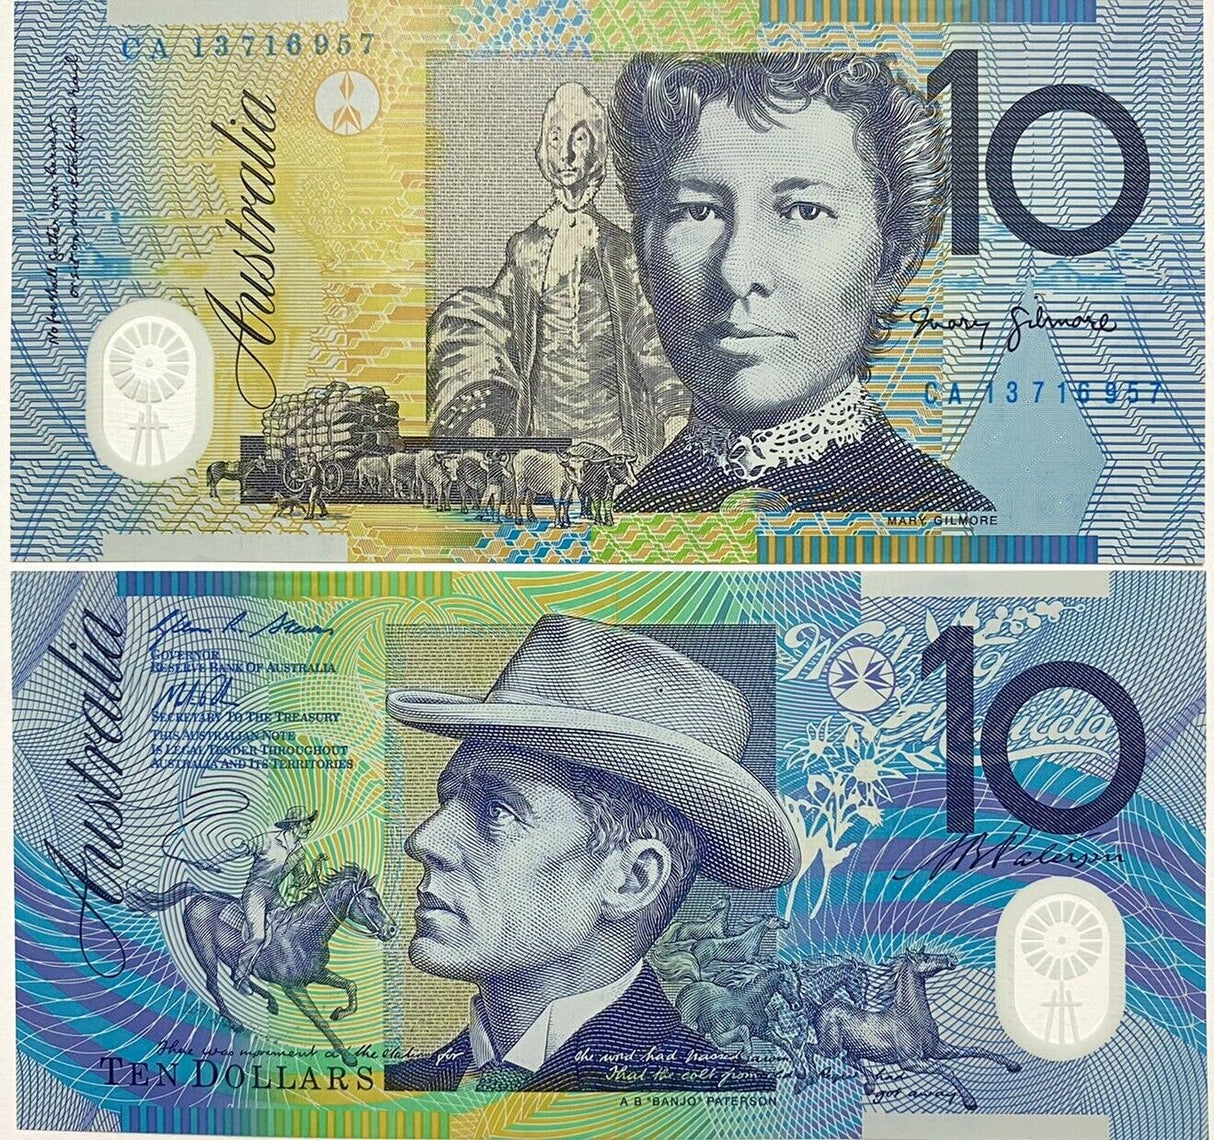 Australia 10 Dollars 2013 P 58 g POLYMER AUnc